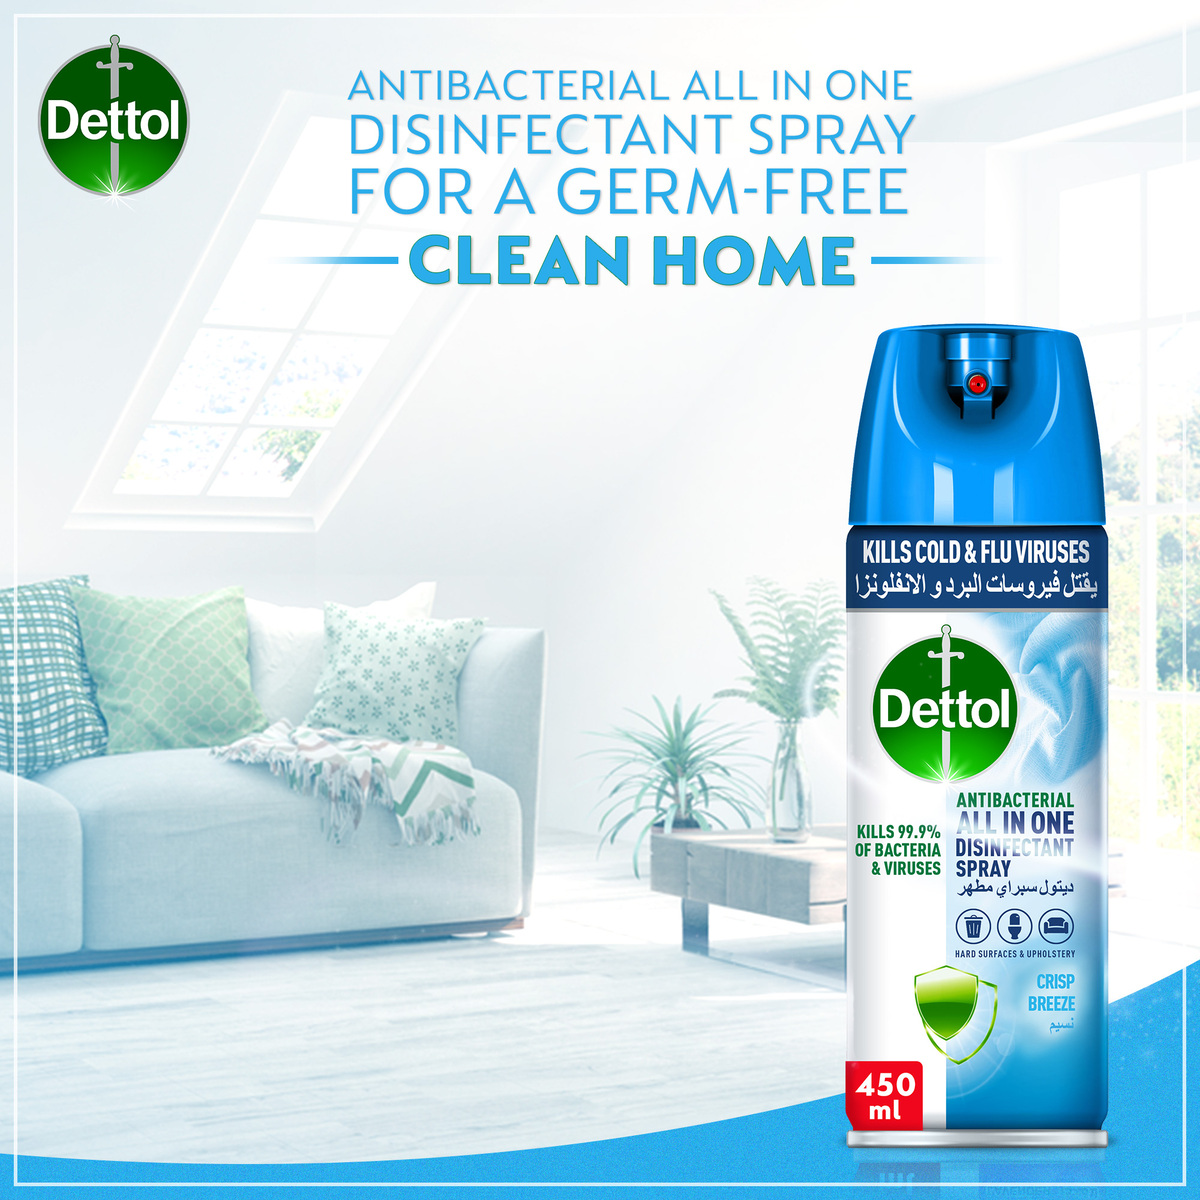 Dettol Crisp Breeze Antibacterial All in One Disinfectant Spray 450ml